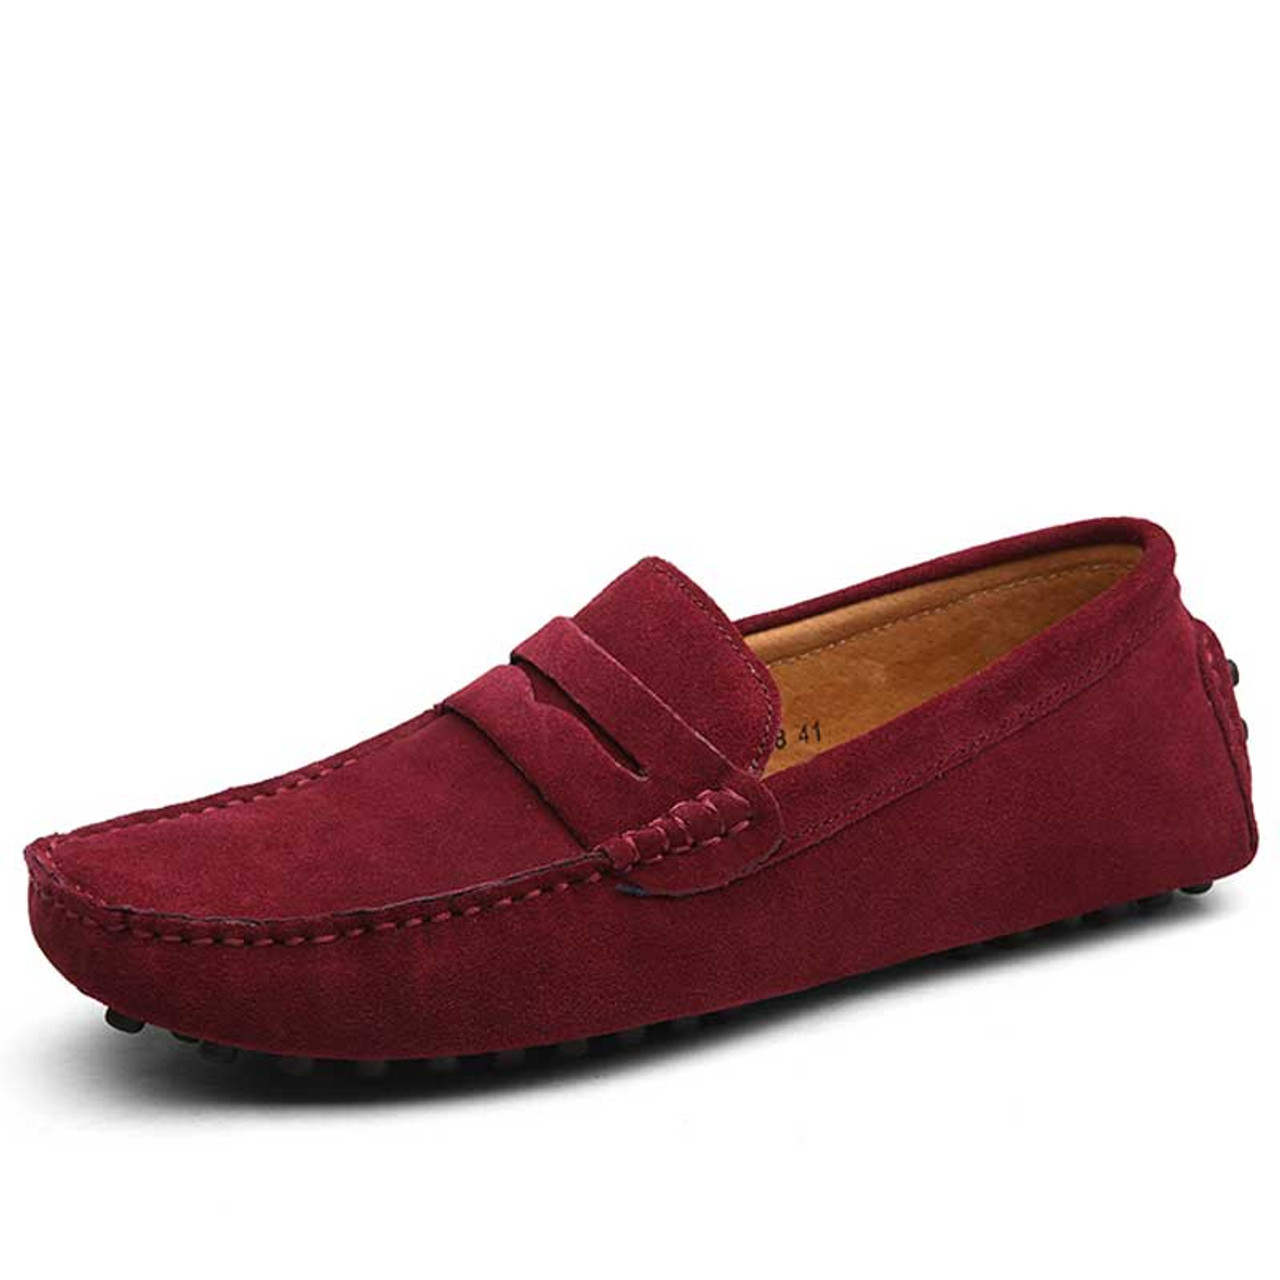 Souvenir overvåge tyk Red suede penny strap slip on shoe loafer | Mens shoe loafers online 2275MS